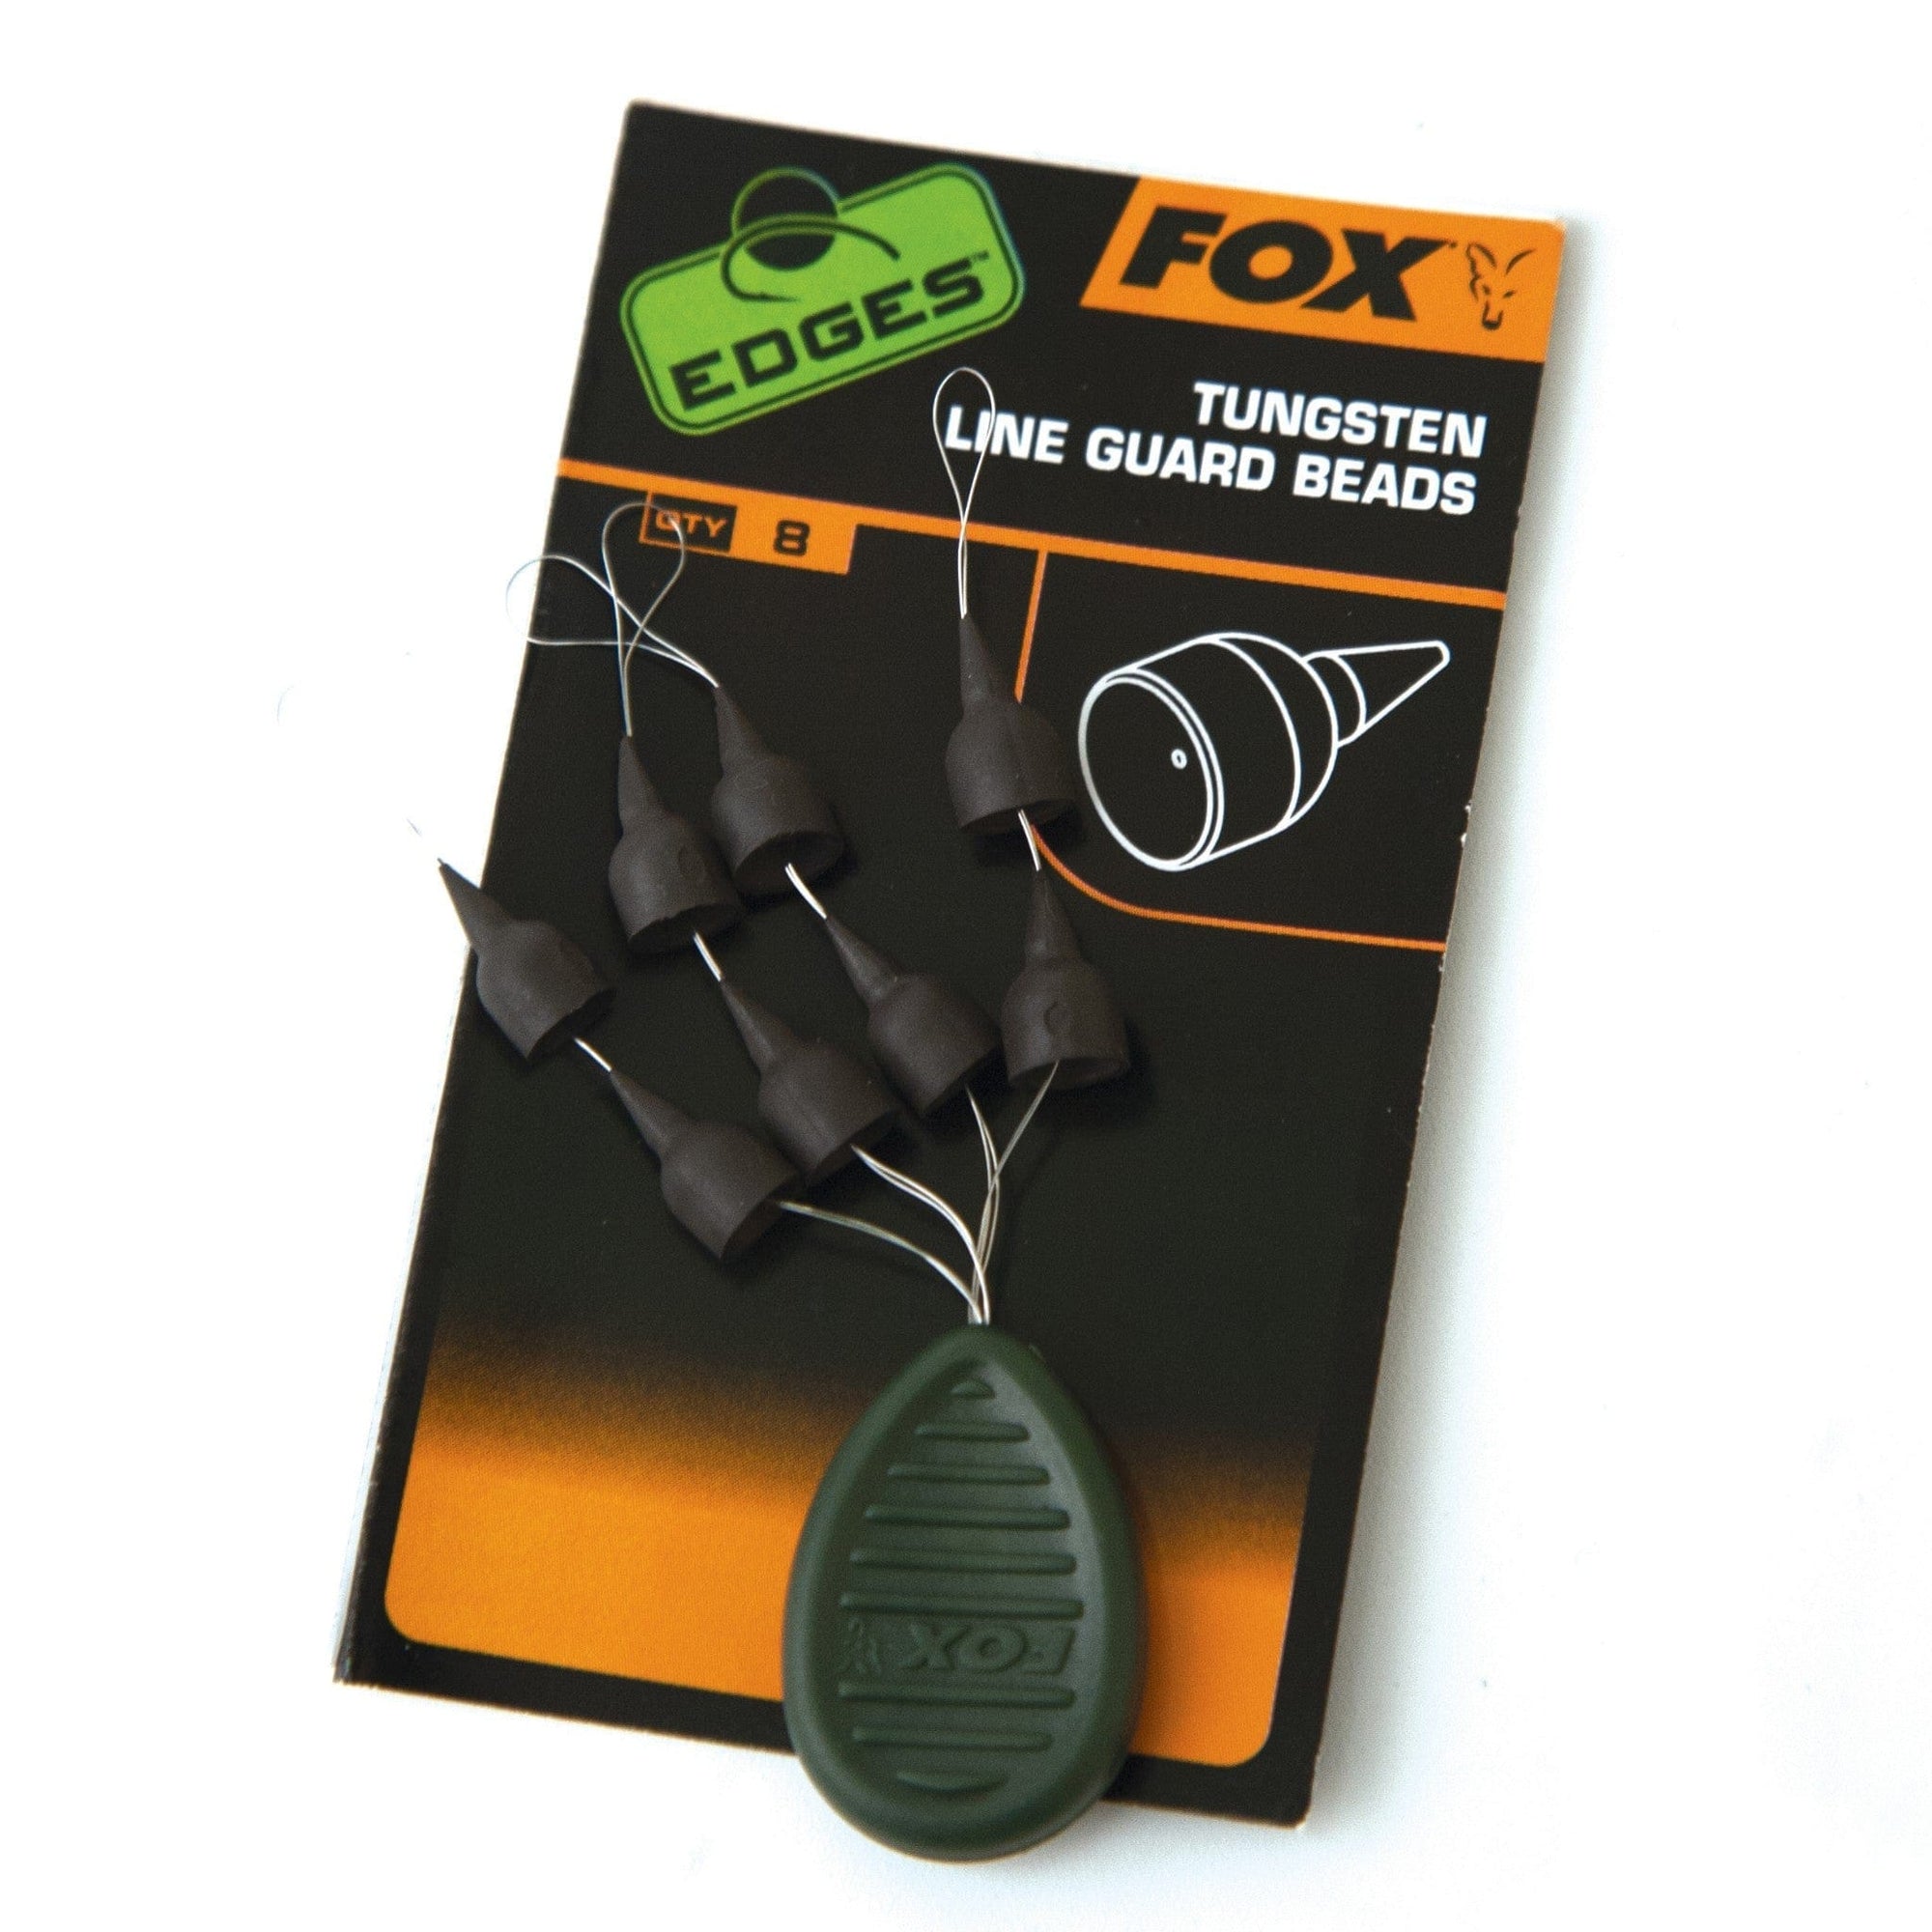 FOX Edges Tungsten Line guard beads x 8.